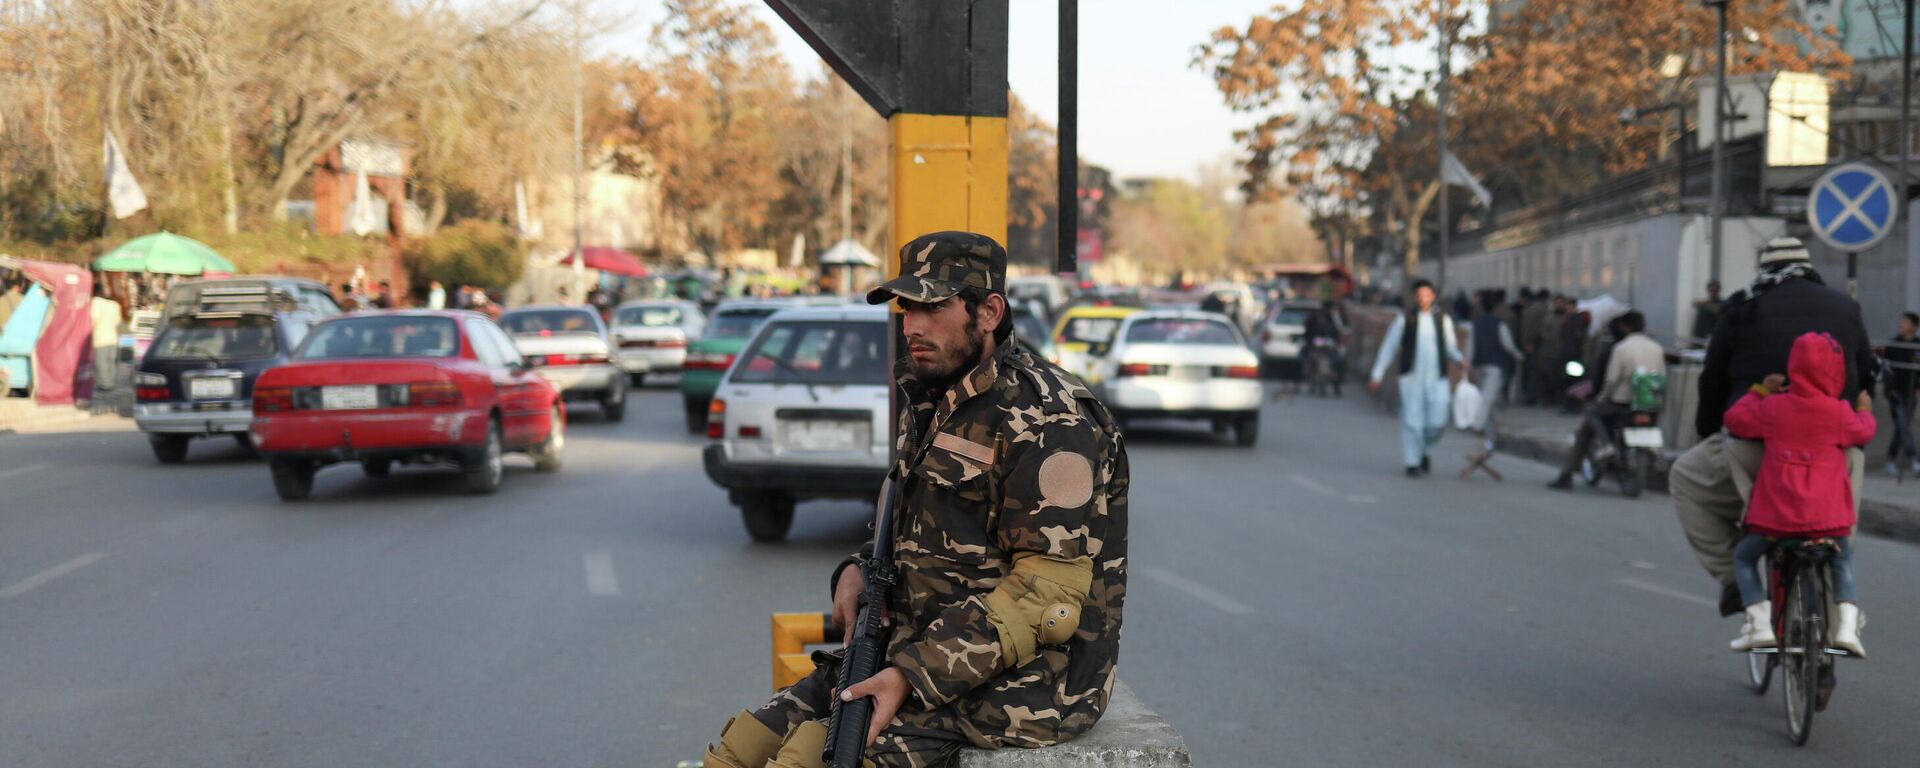 A Taliban fighter guards a street in Kabul, Afghanistan November 25, 2021. REUTERS/Ali Khara - Sputnik International, 1920, 13.12.2021